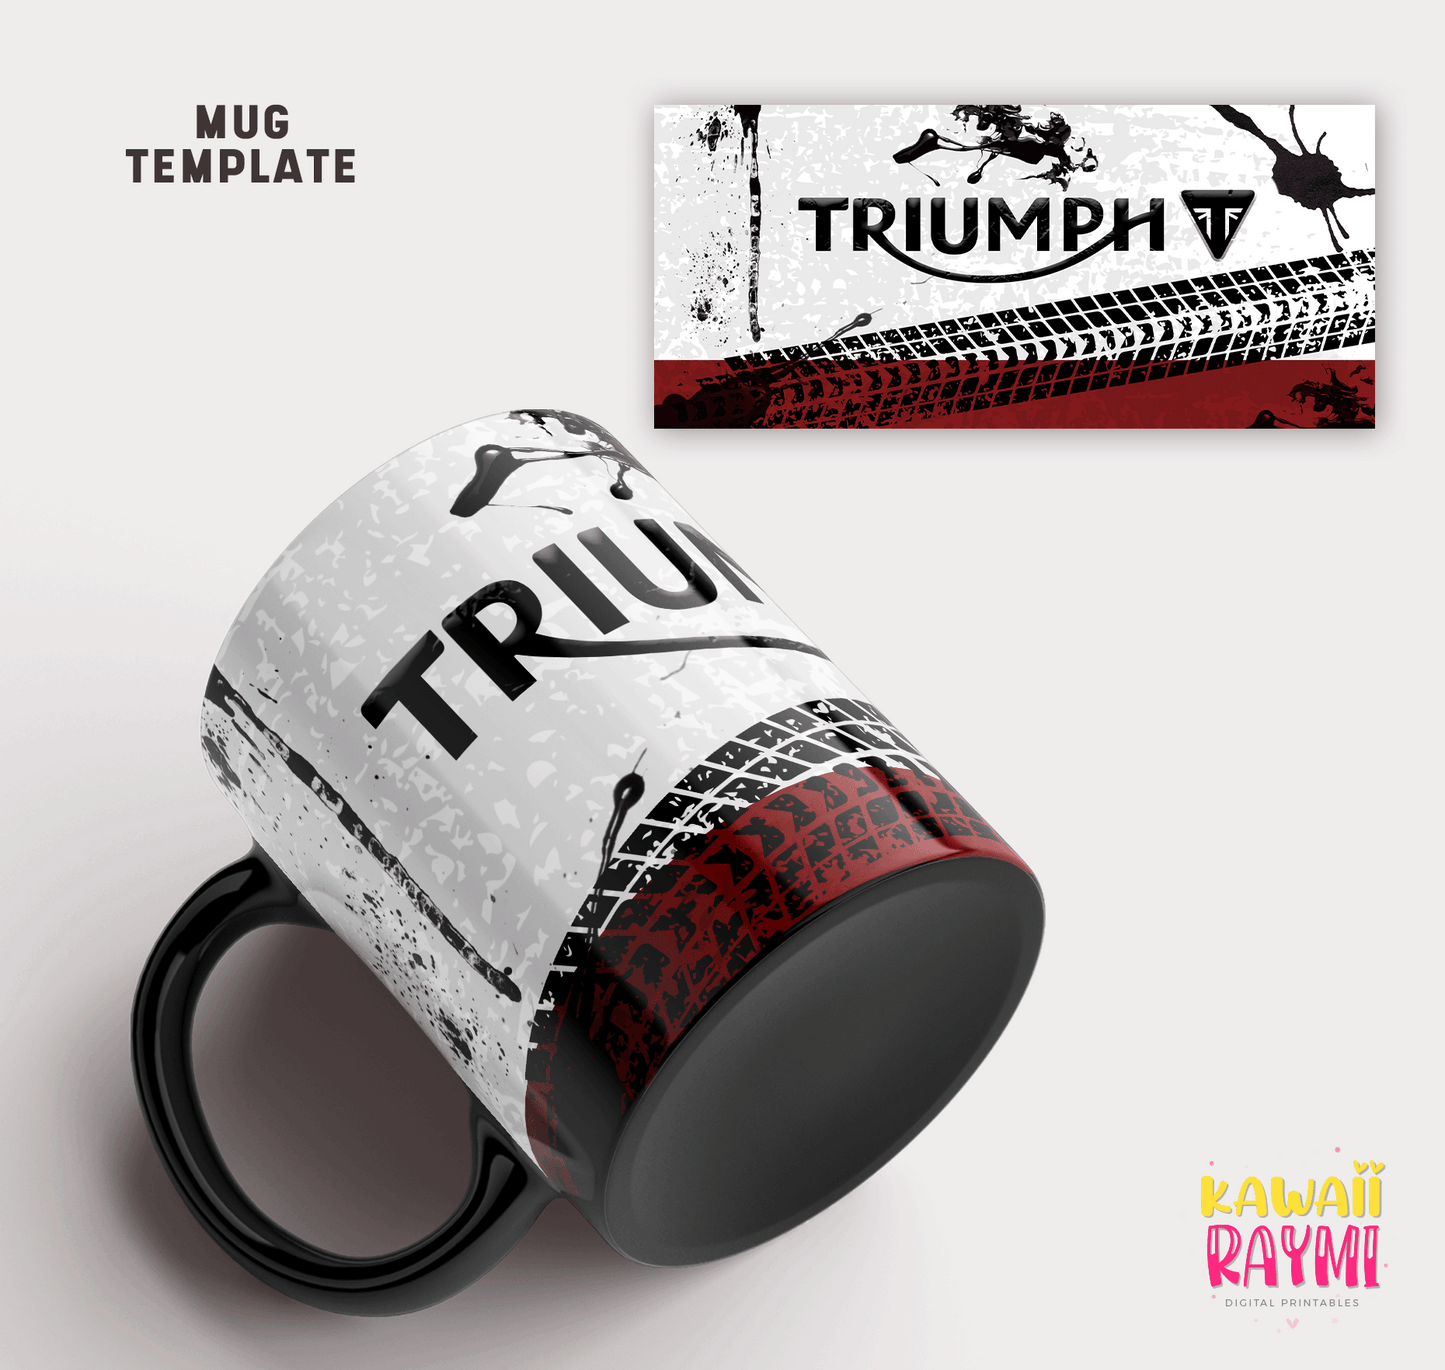 Triumph motorcycle mug template